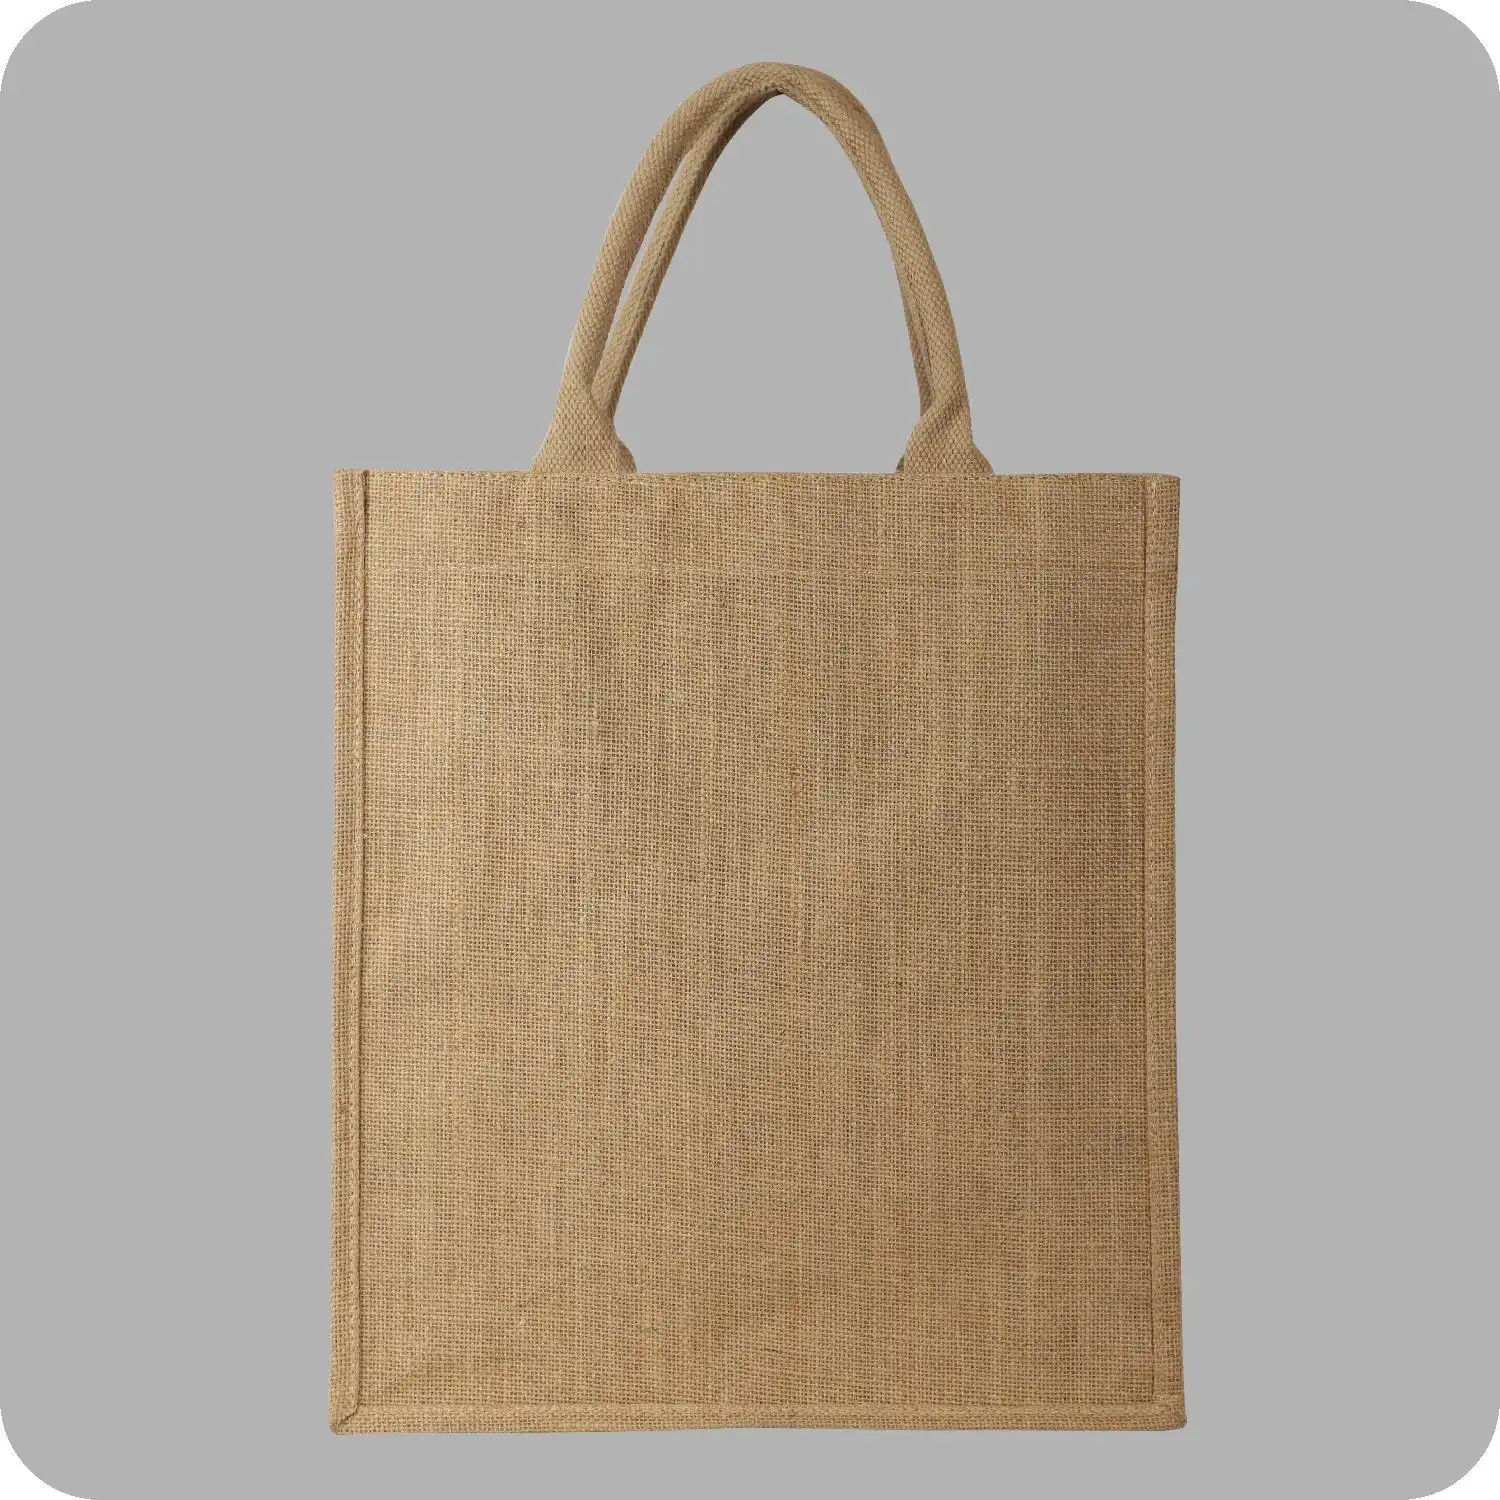 Versatile Use, Authentic Jute Bags